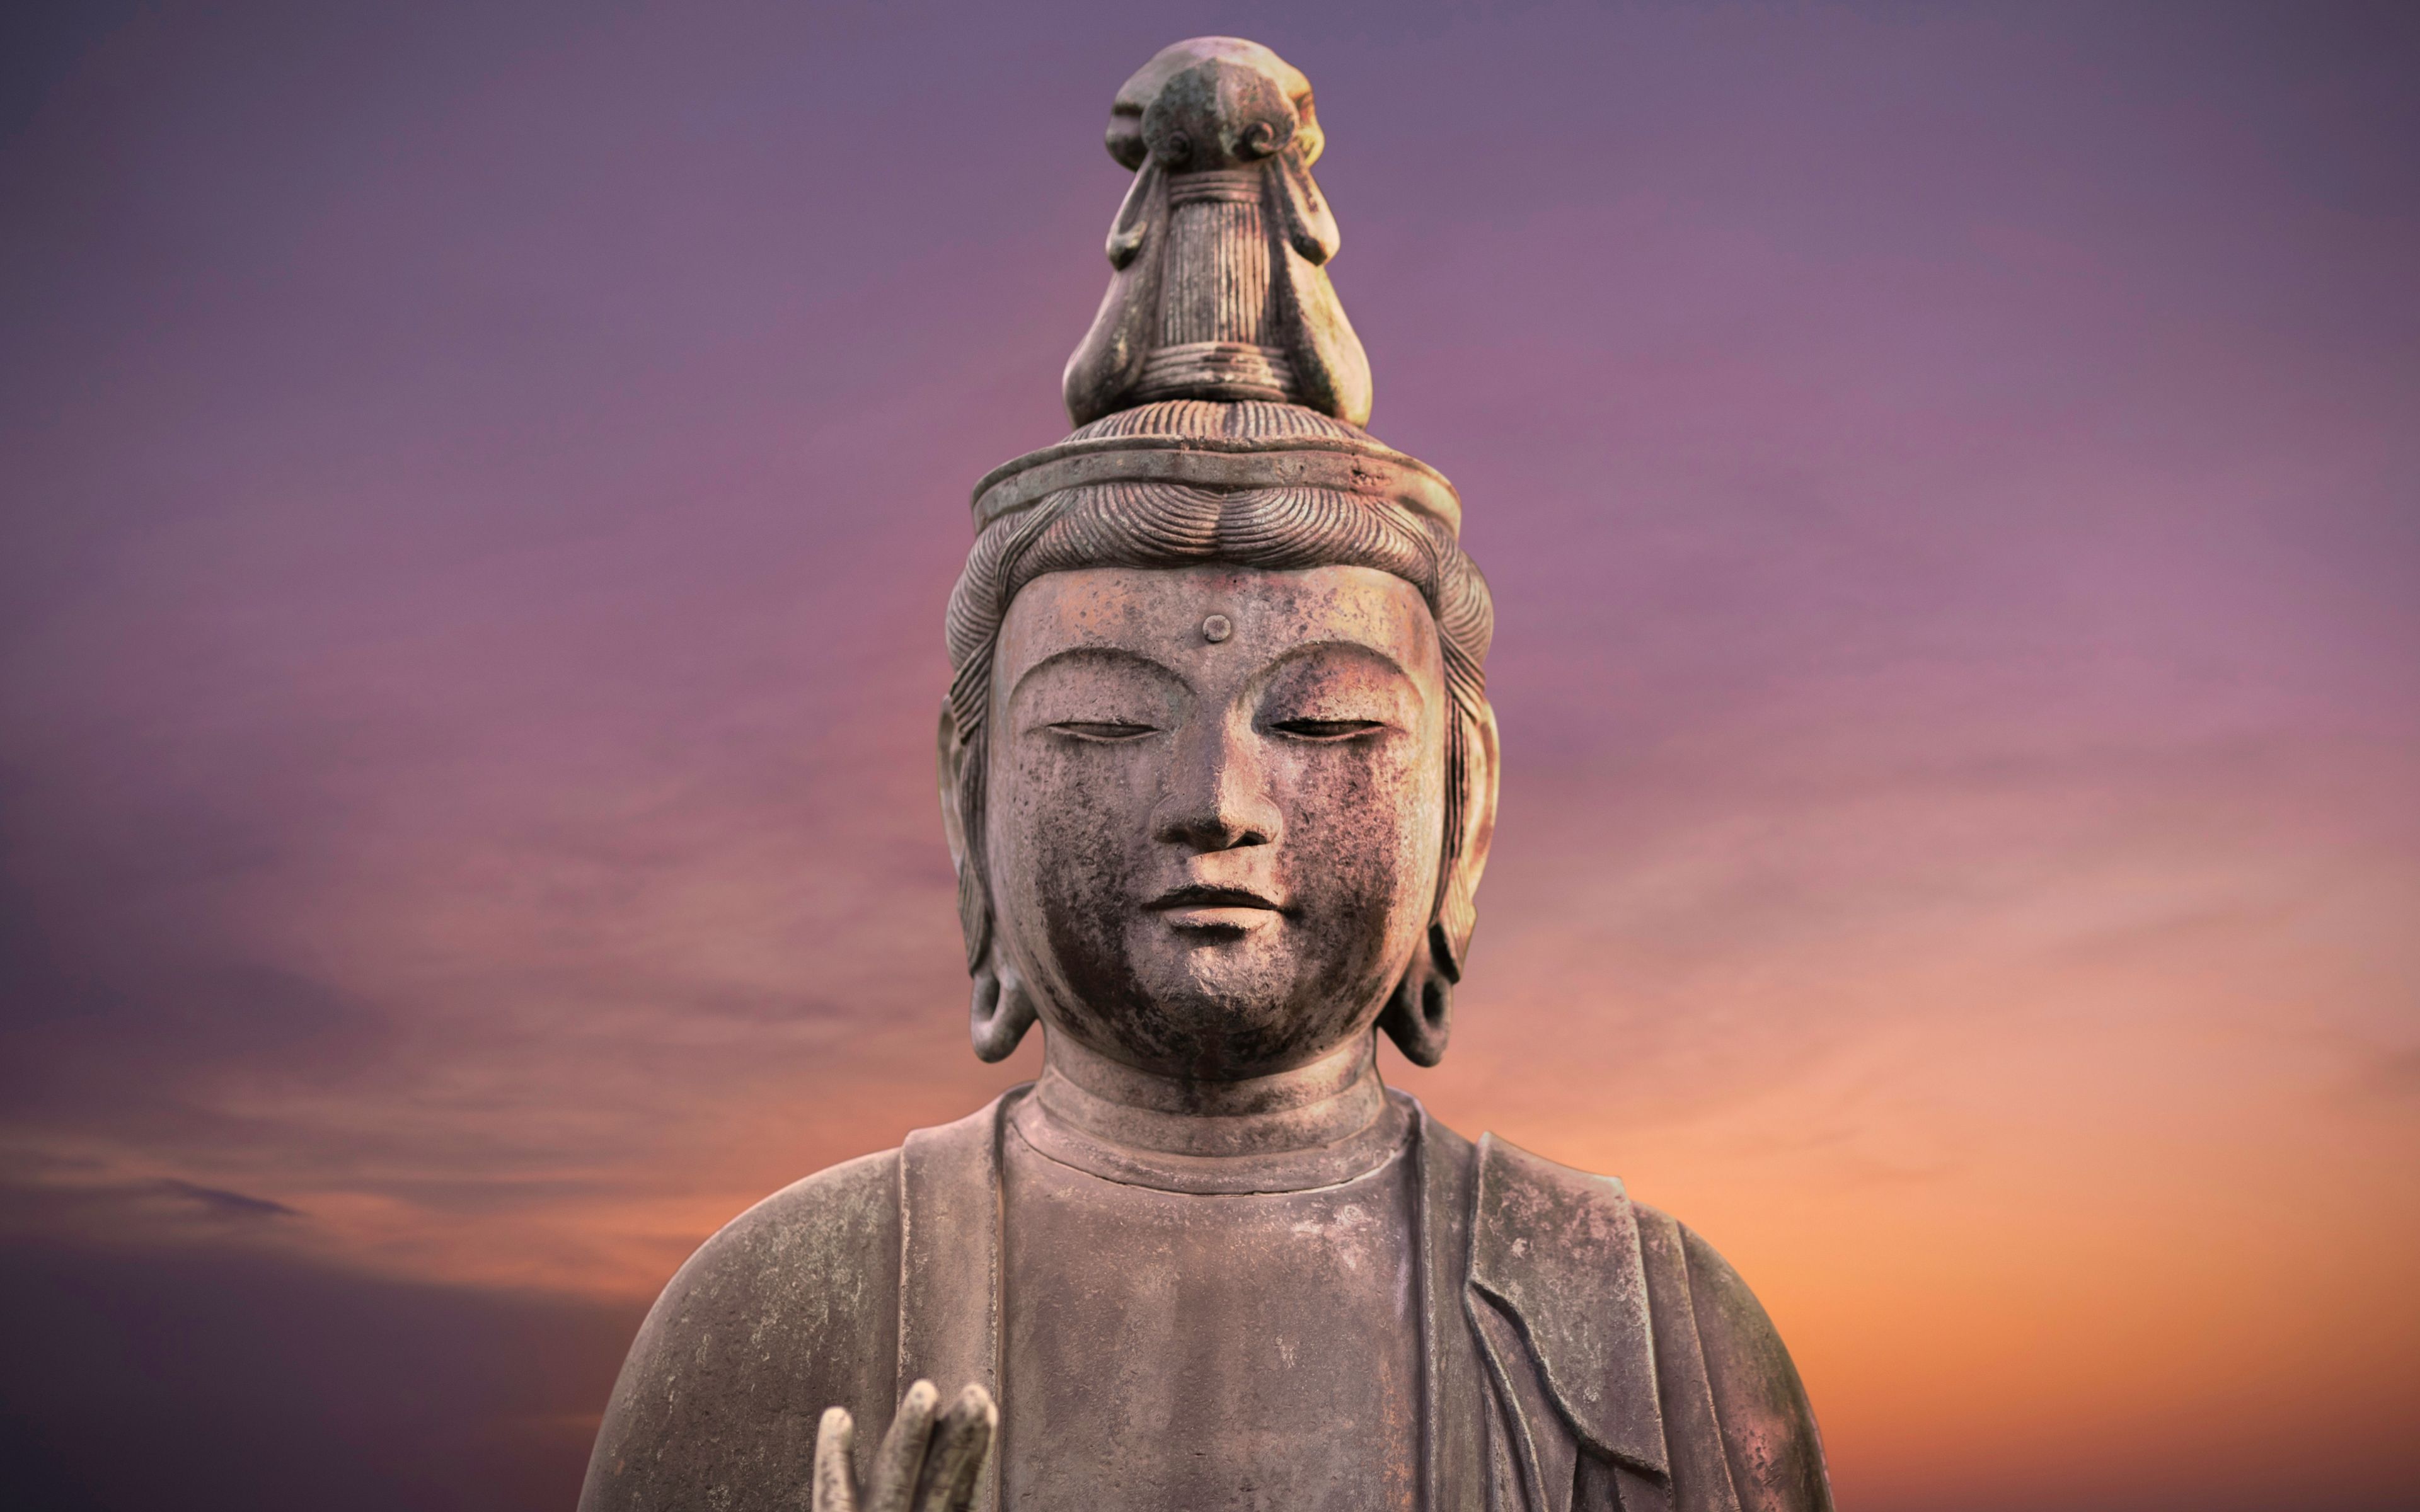 Download 3840x2400 wallpaper meditation, buddha, statue, 4k, ultra HD 16: widescreen, 3840x2400 HD image, background, 20698